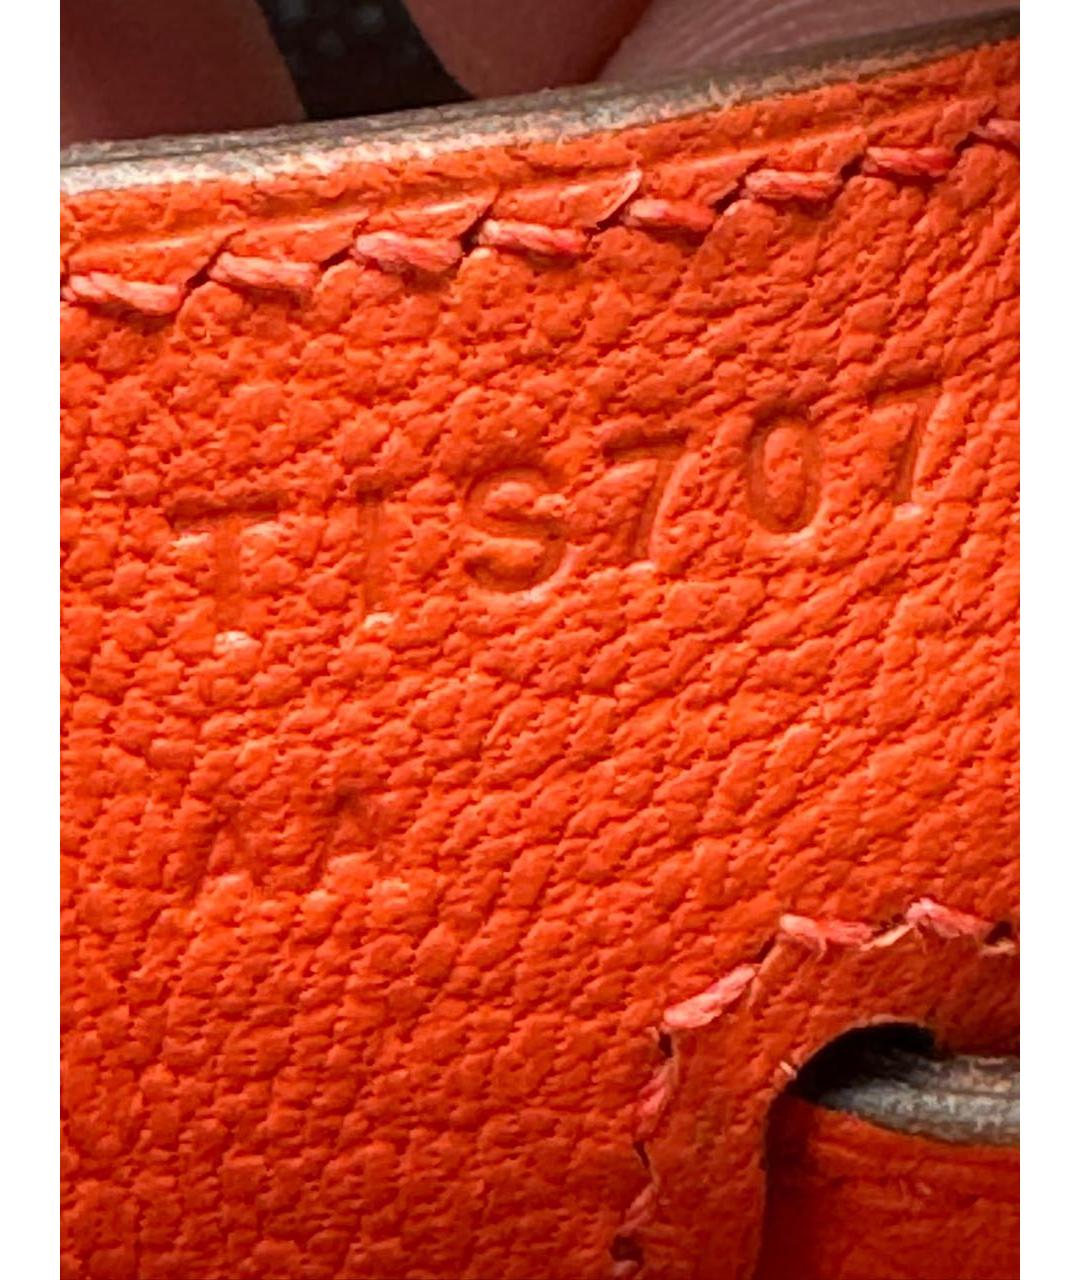 HERMES PRE-OWNED Оранжевая кожаная сумка с короткими ручками, фото 7